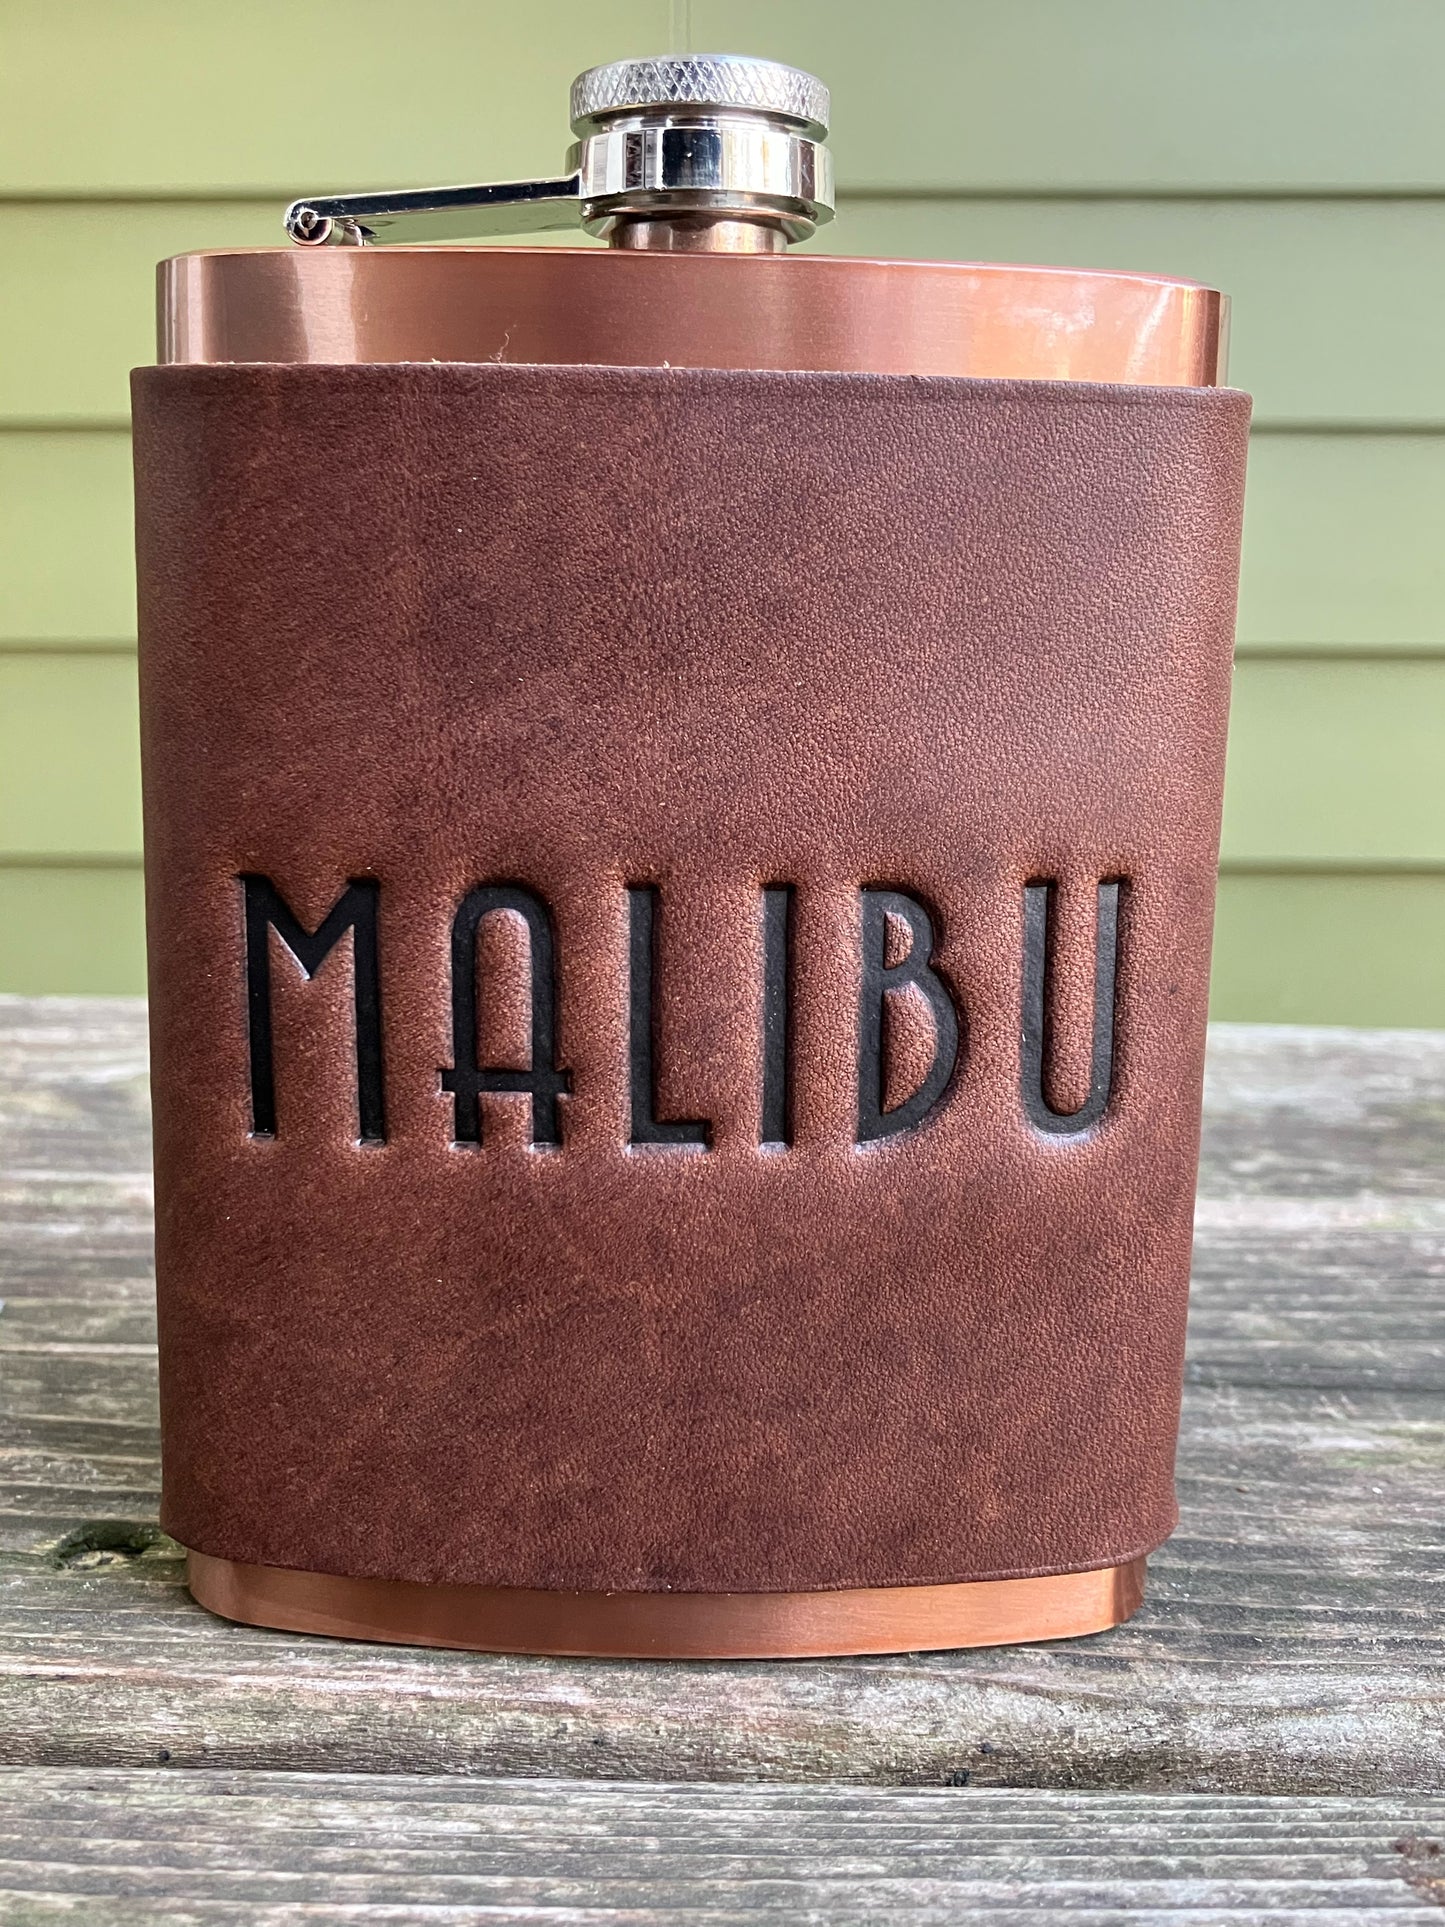 Leather Flask - Malibu